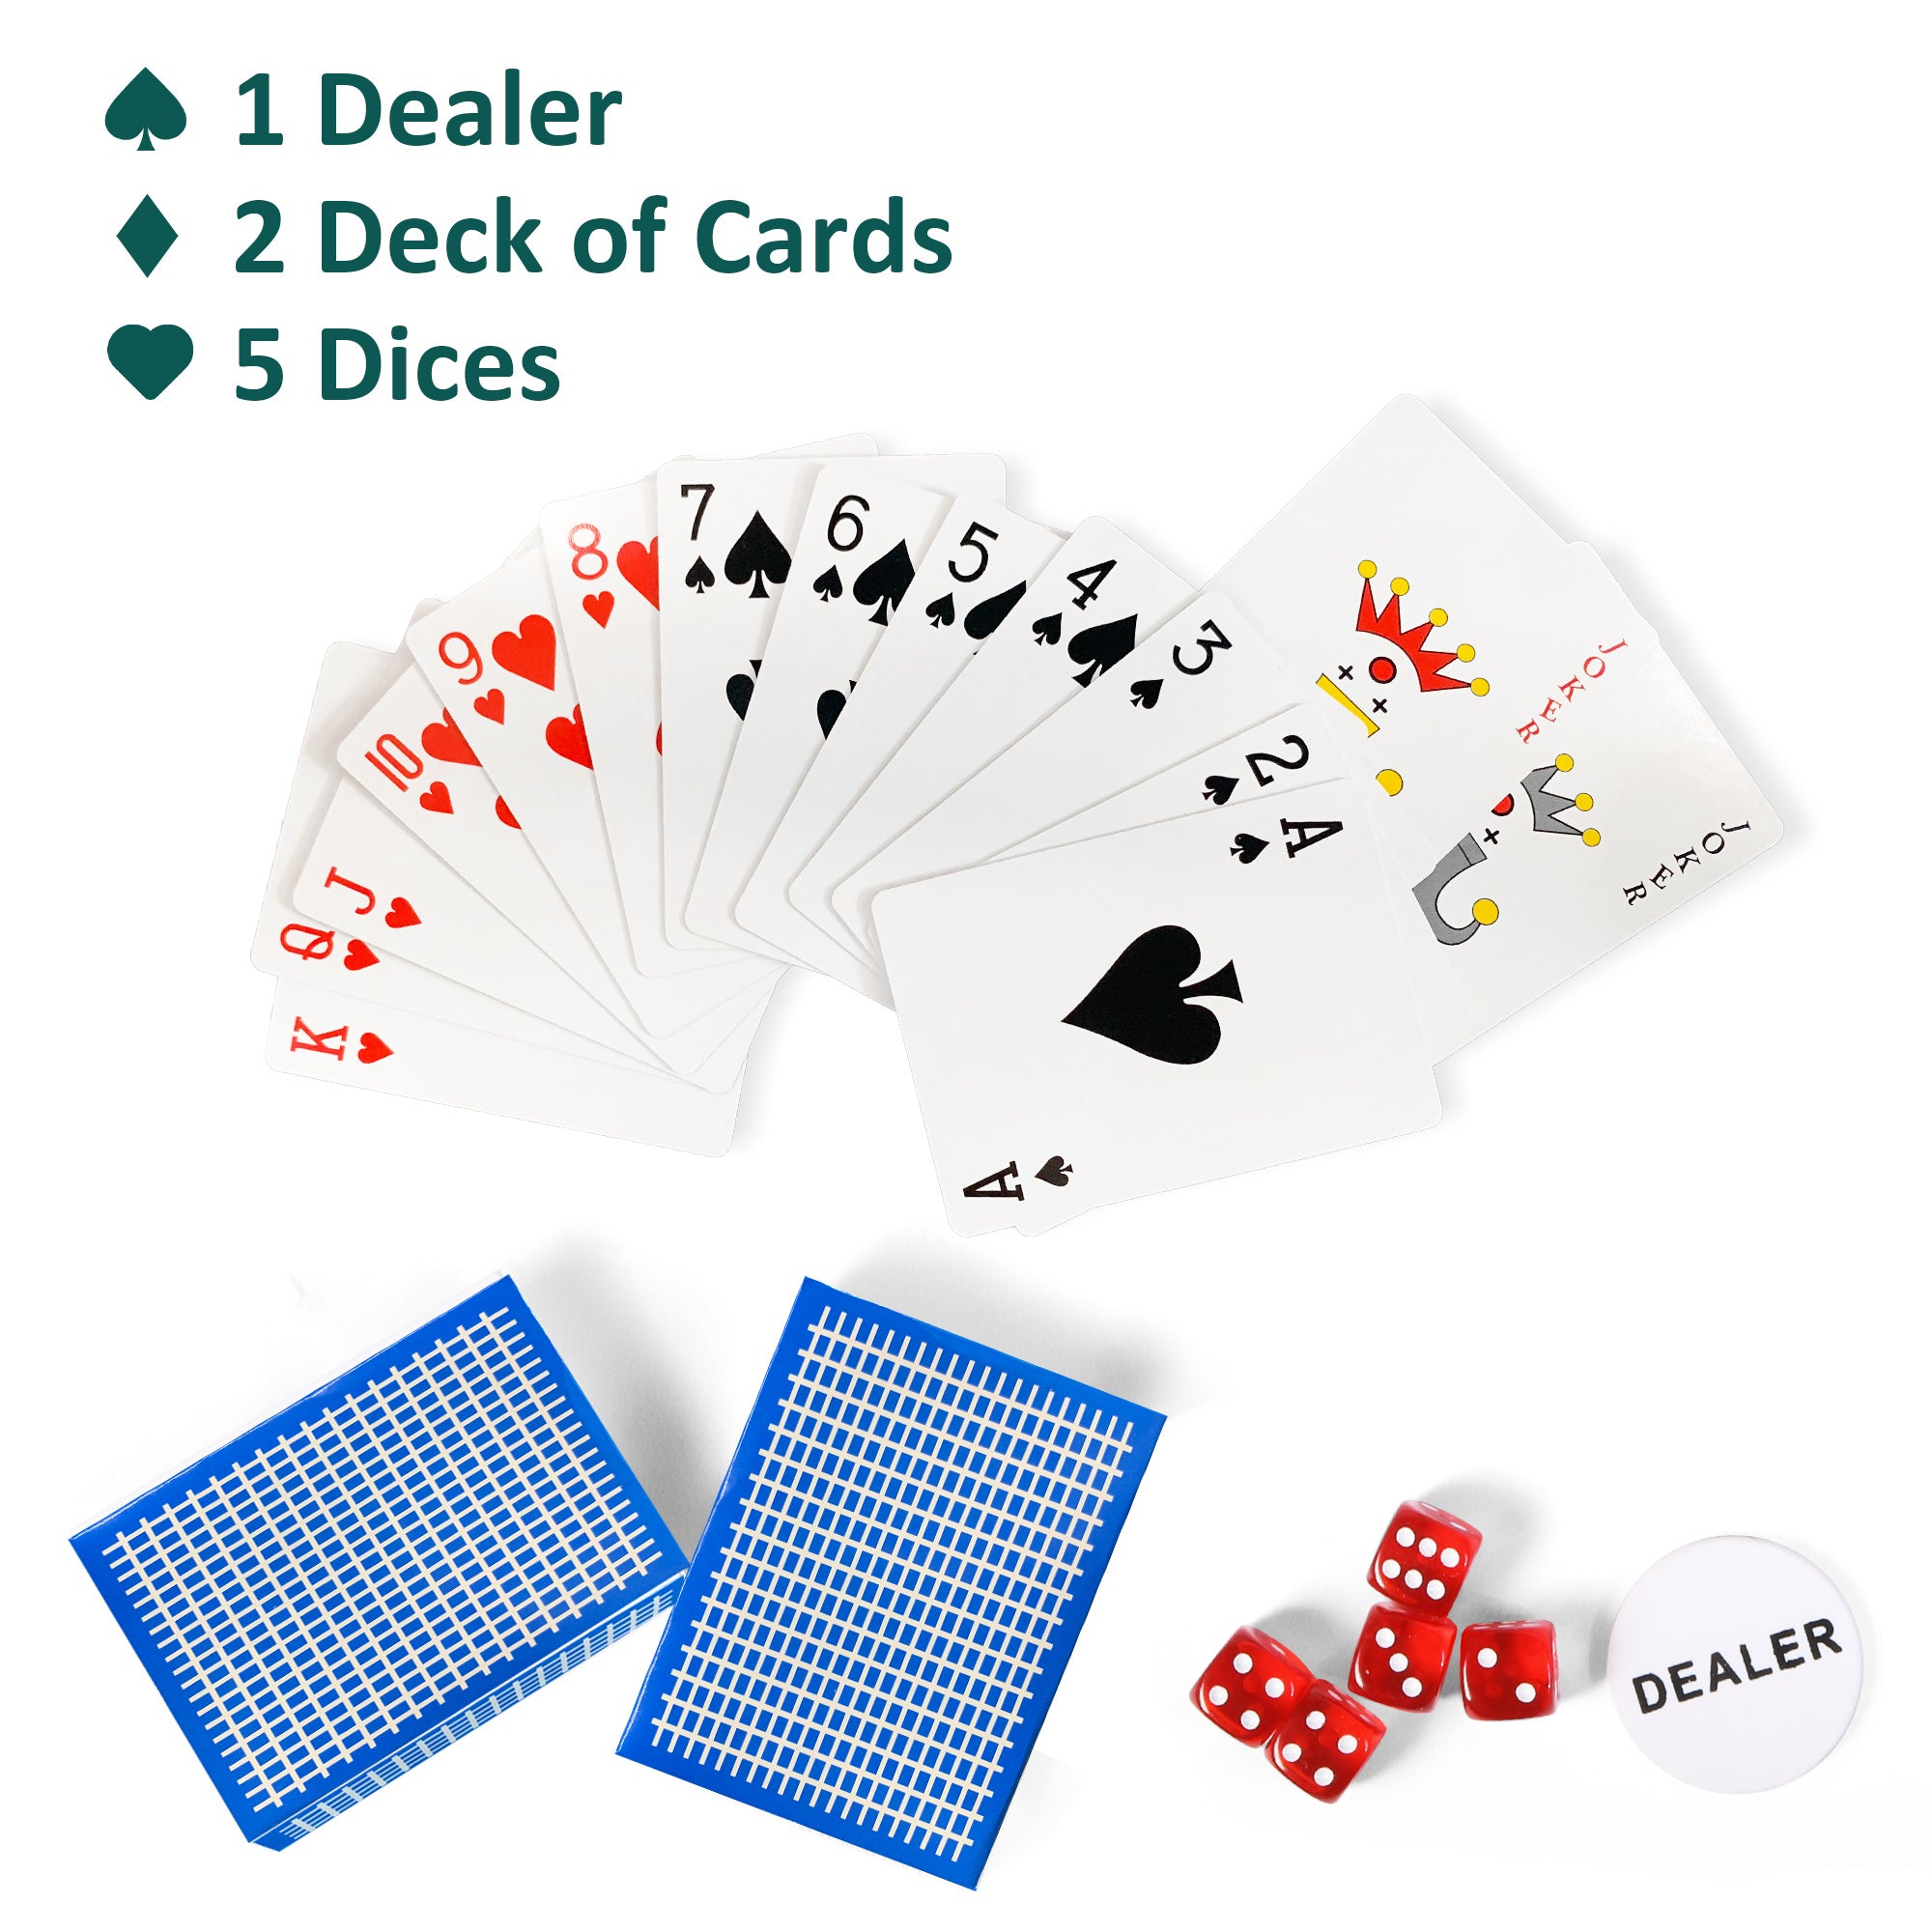 300 Poker Chip Set, 11.5 Gram Poker Set Casino Clay Poker Chips Sets with Case